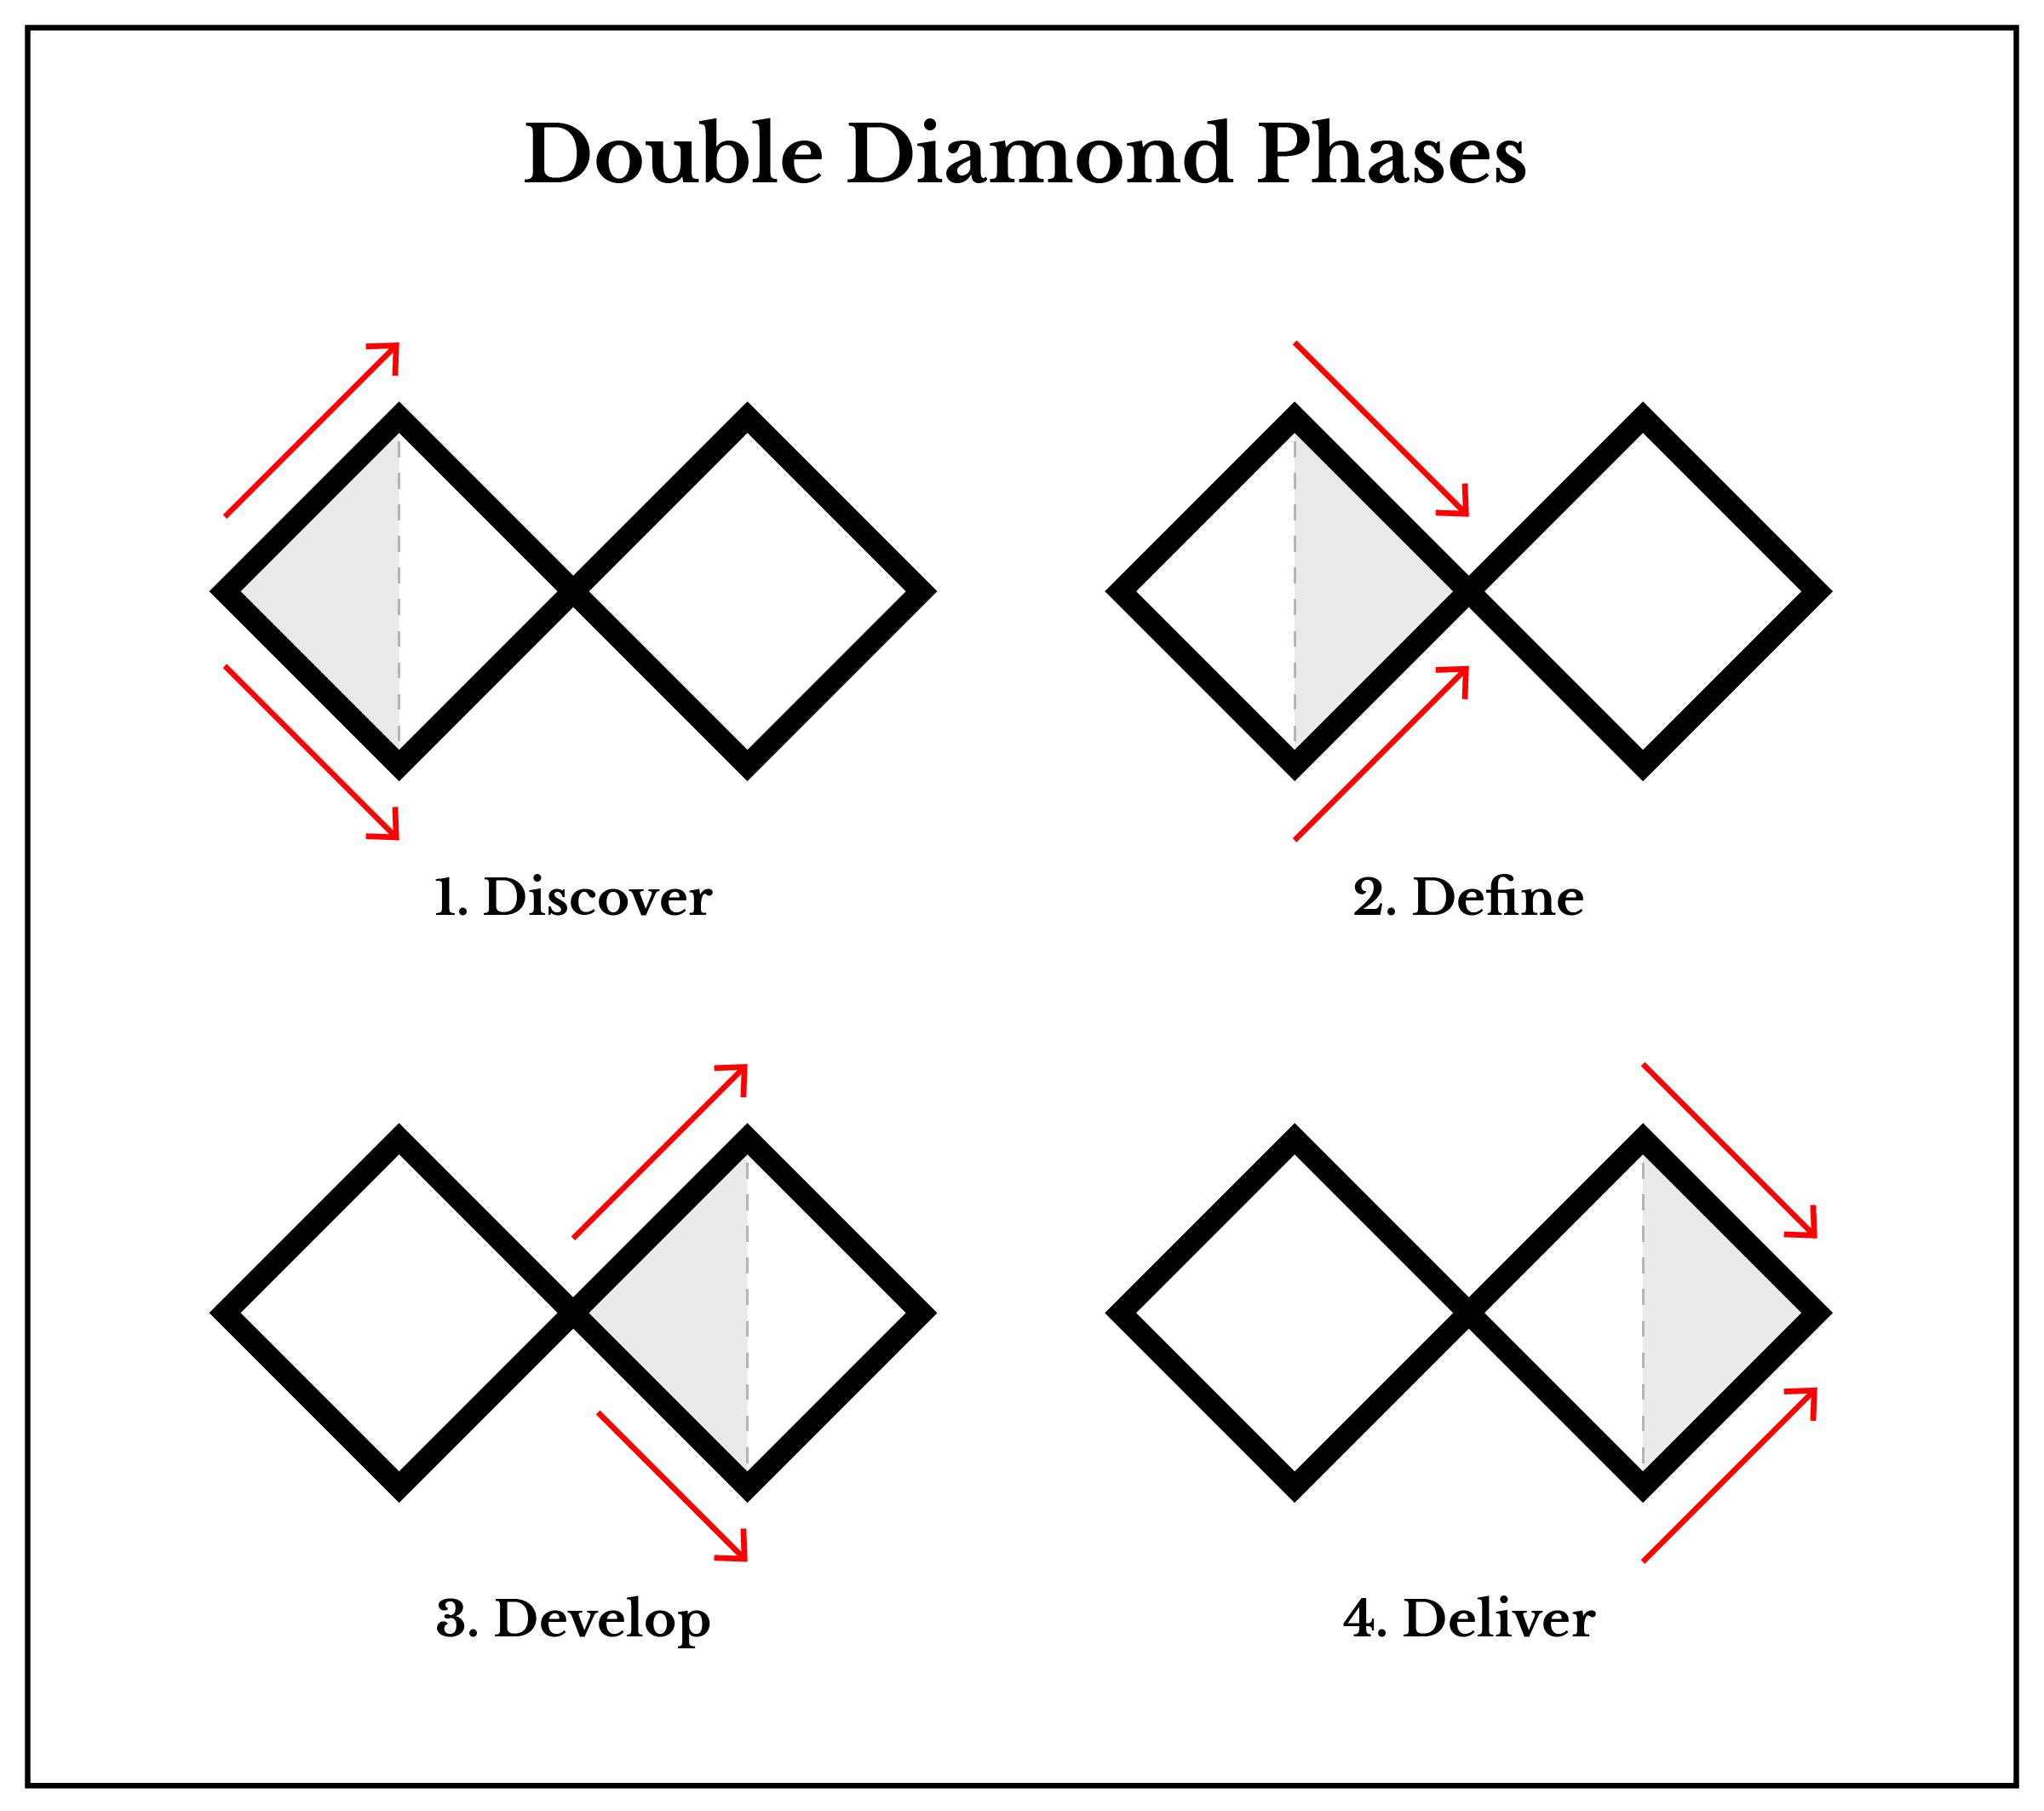 Double Diamond Phases Diagram